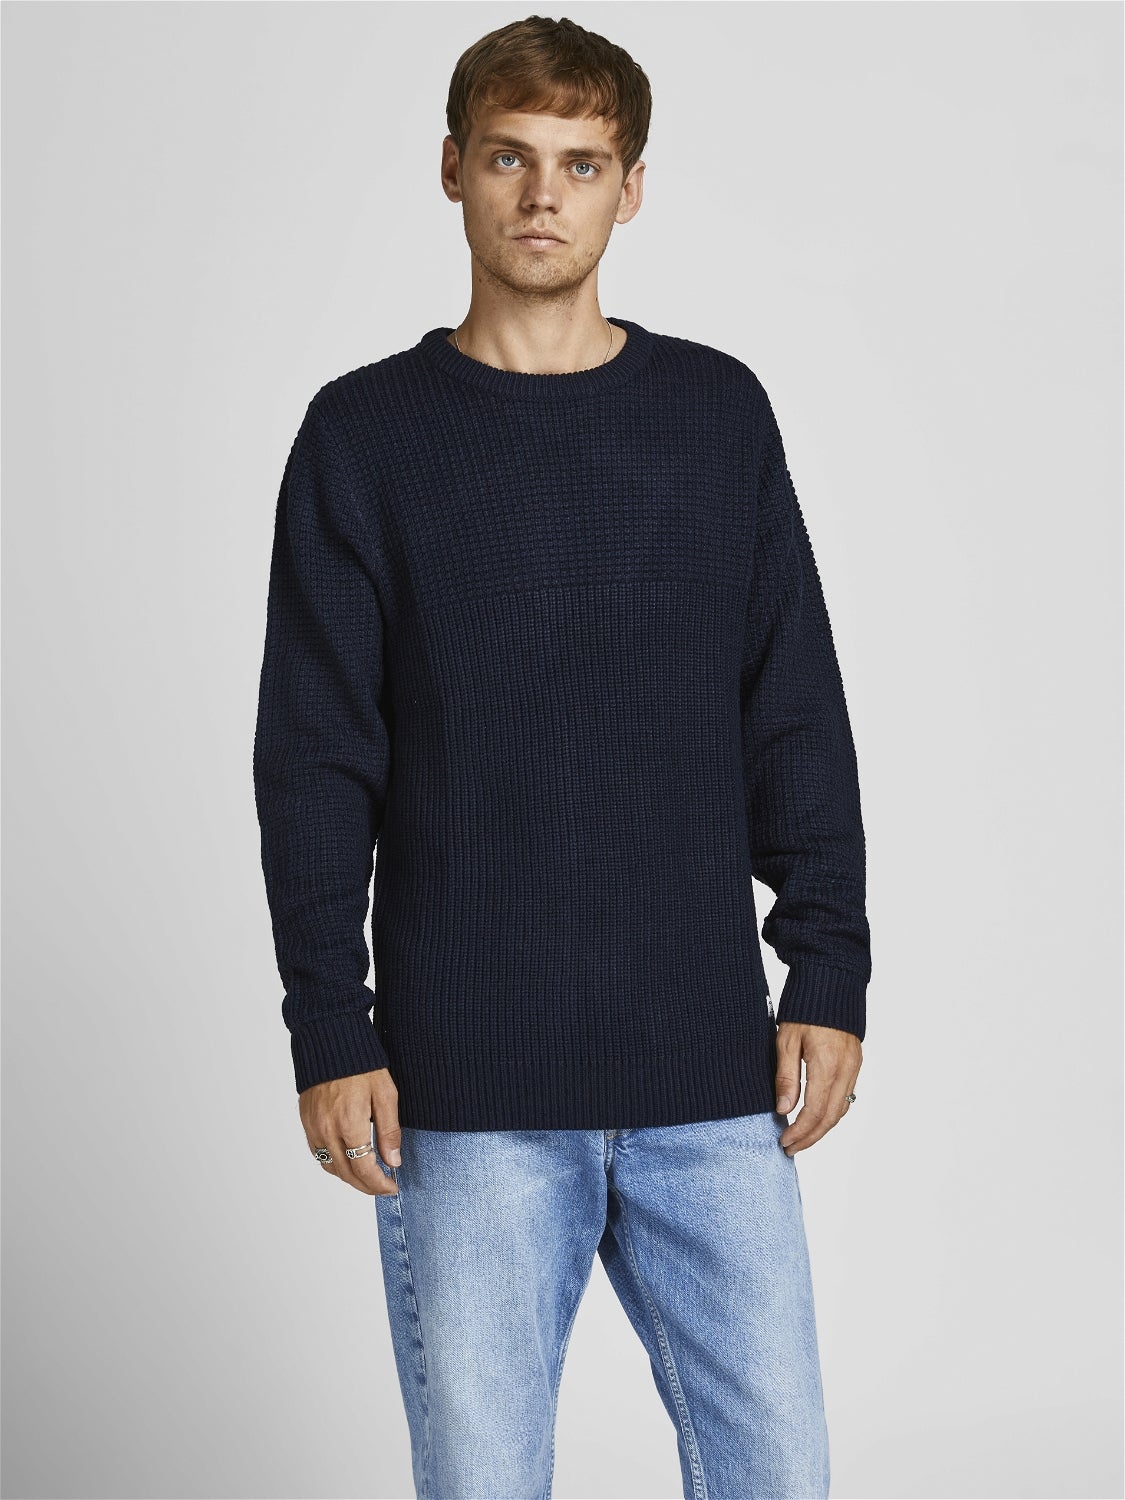 discount 56% Jack & Jones jumper Navy Blue XL MEN FASHION Jumpers & Sweatshirts Knitted 